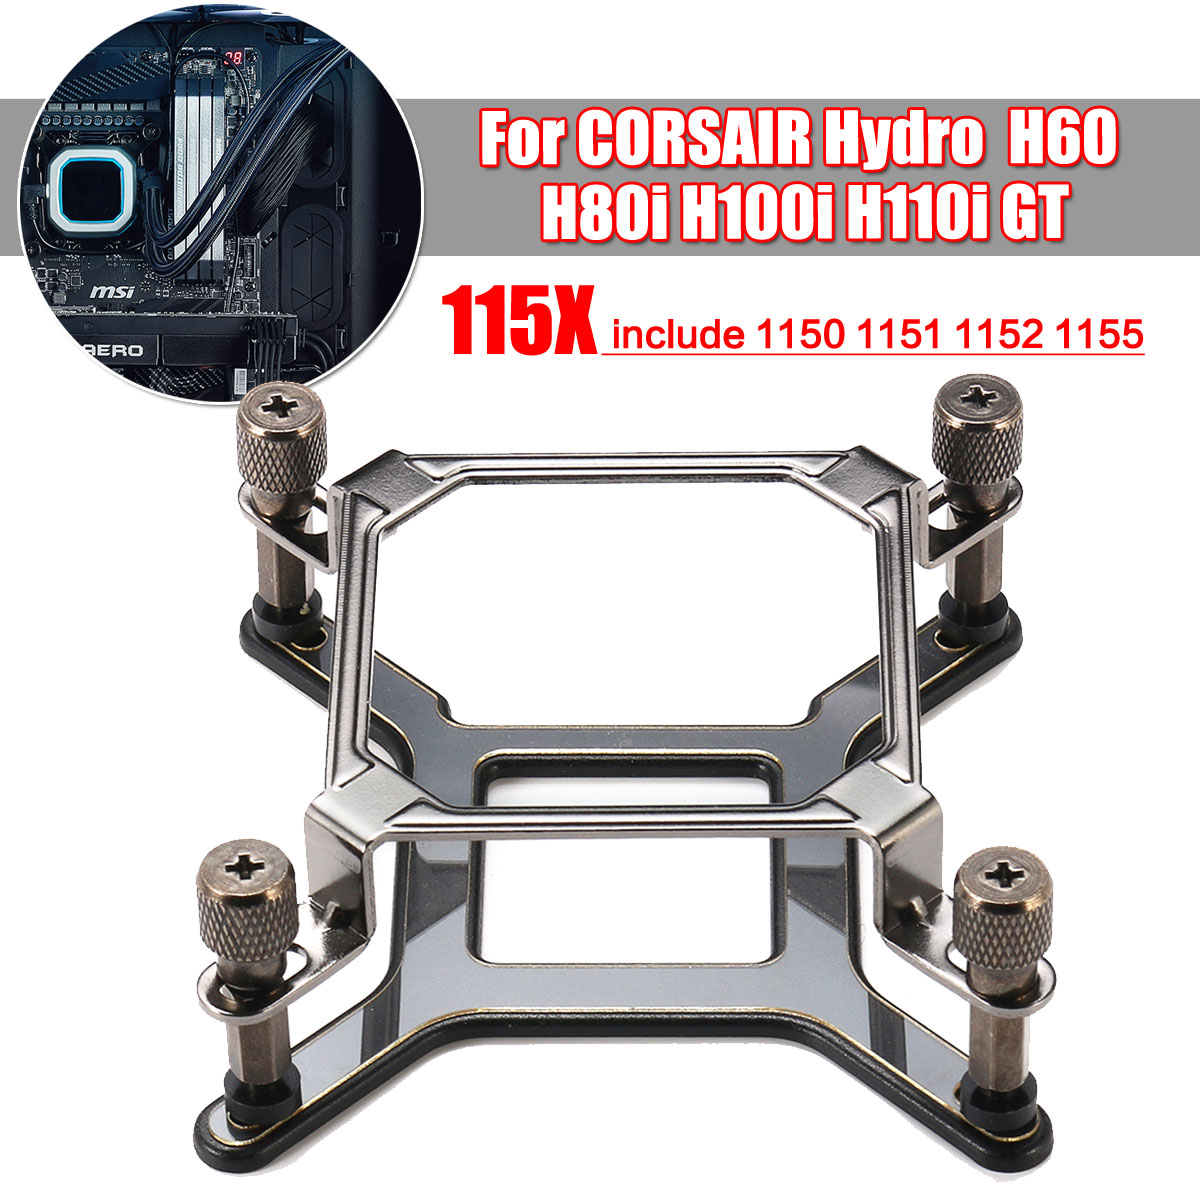 For CORSAIR Hydro H60/H80i/H100i/H100i GT Mounting Cooling Radiator Bracket Kit 